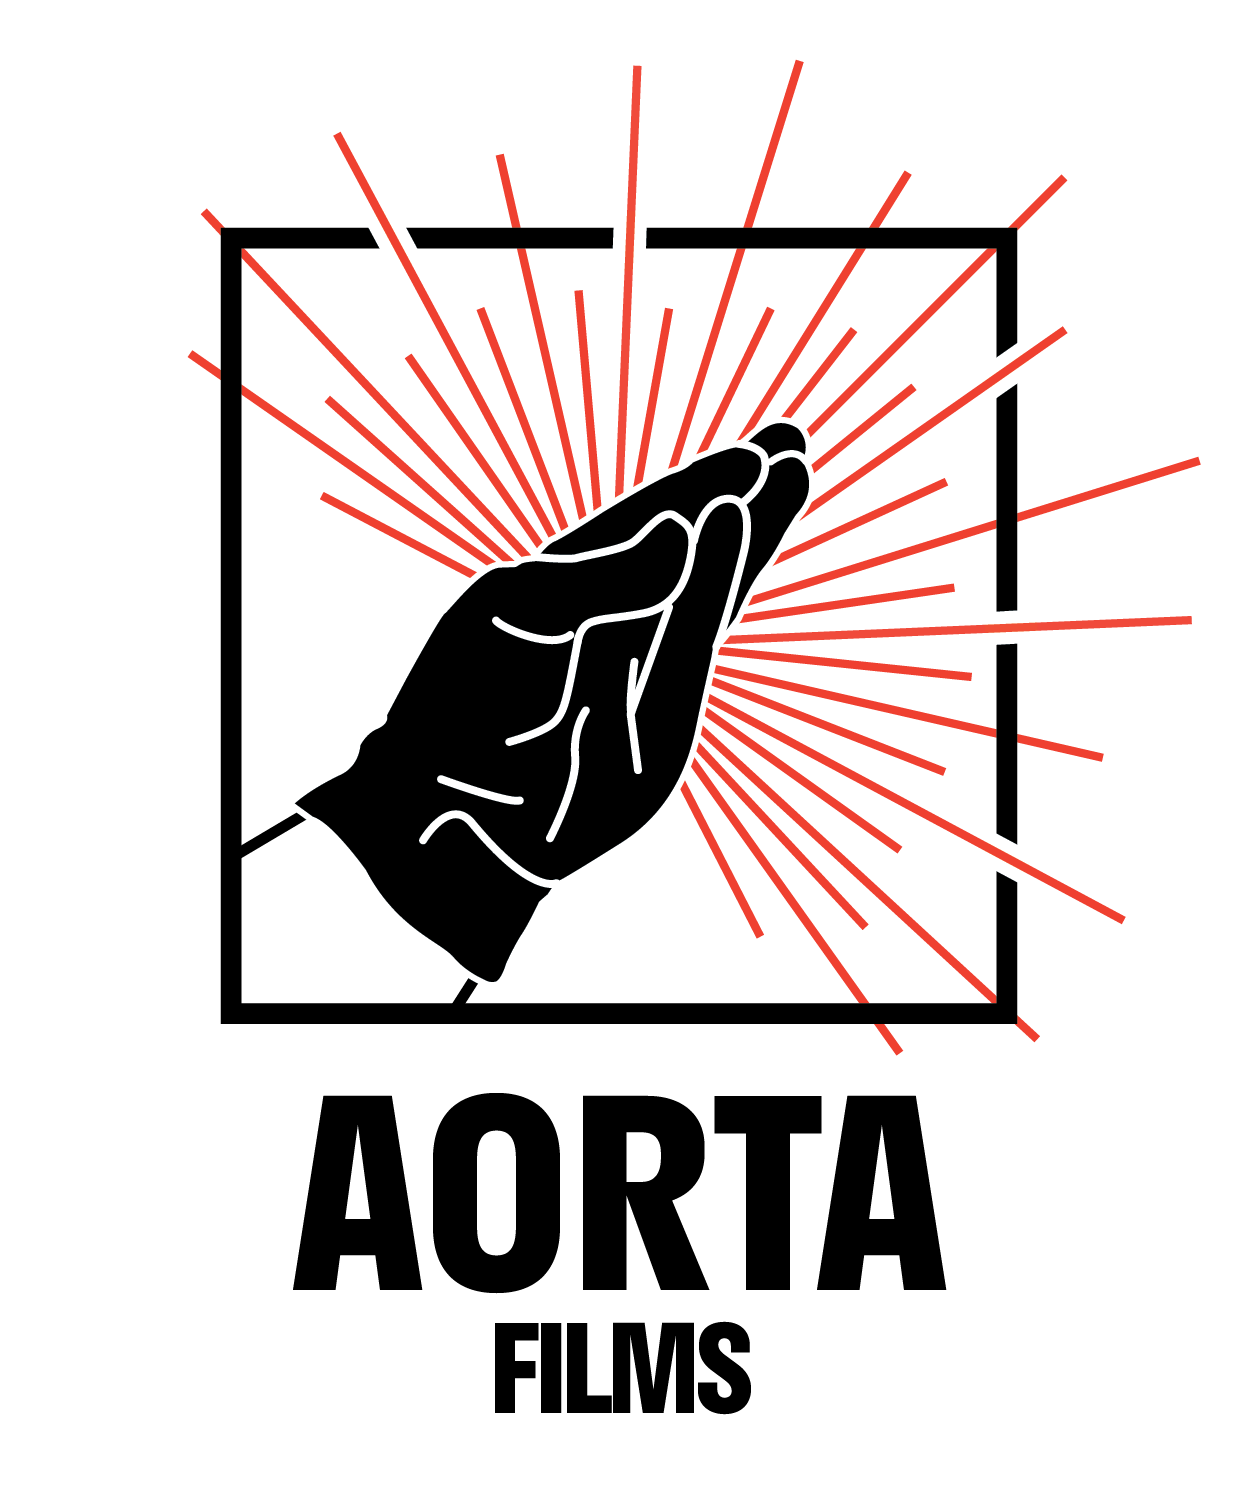 AORTAfilms_aorta_logo_final_withtext-02.png